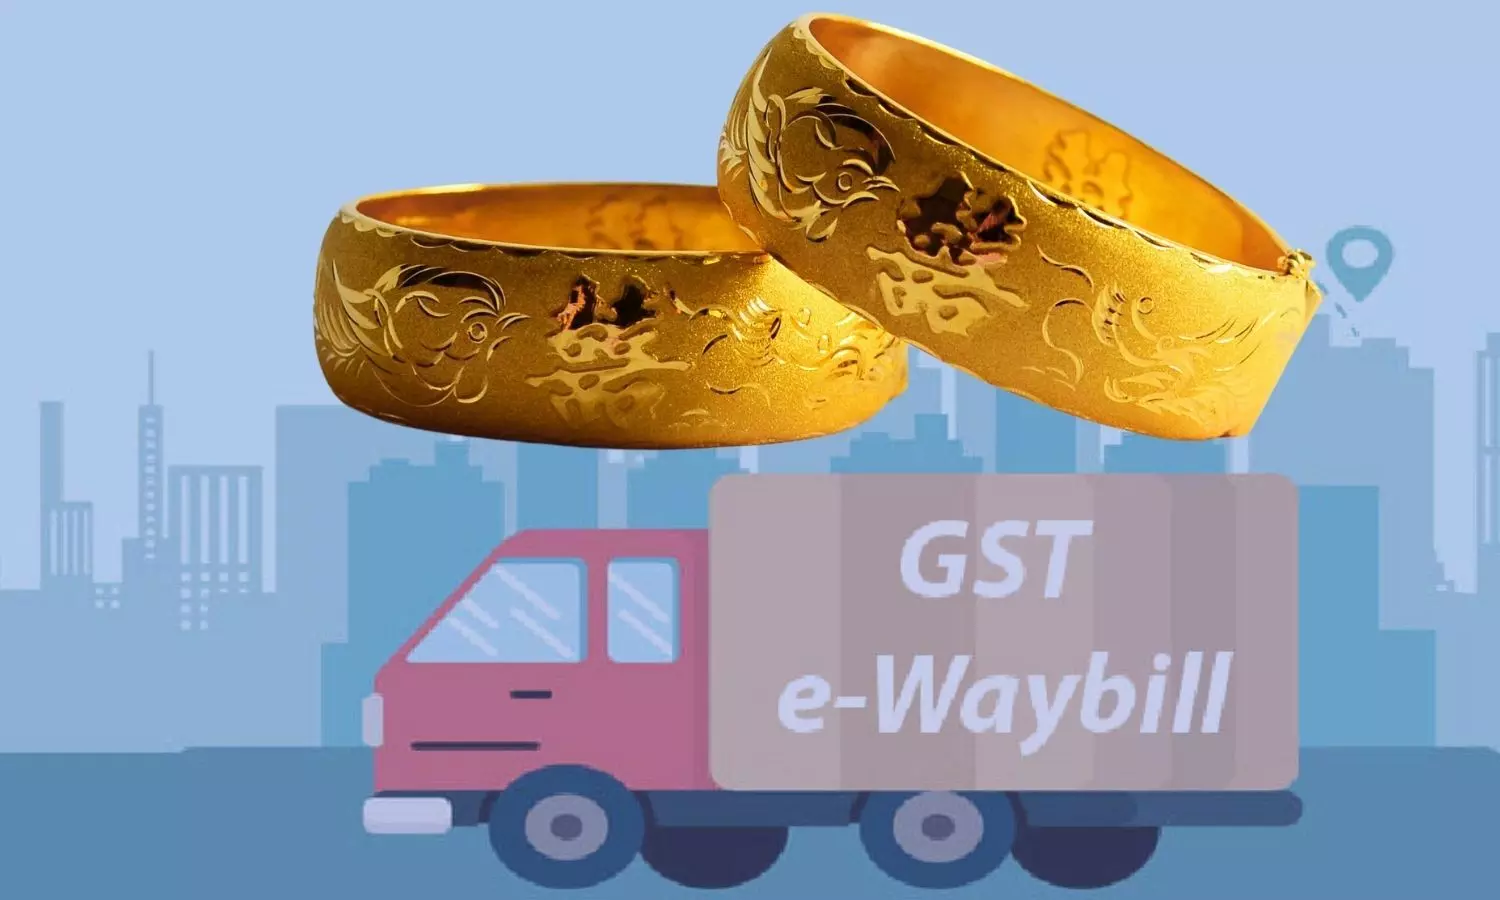 Gold Bangles and GST E-way bill